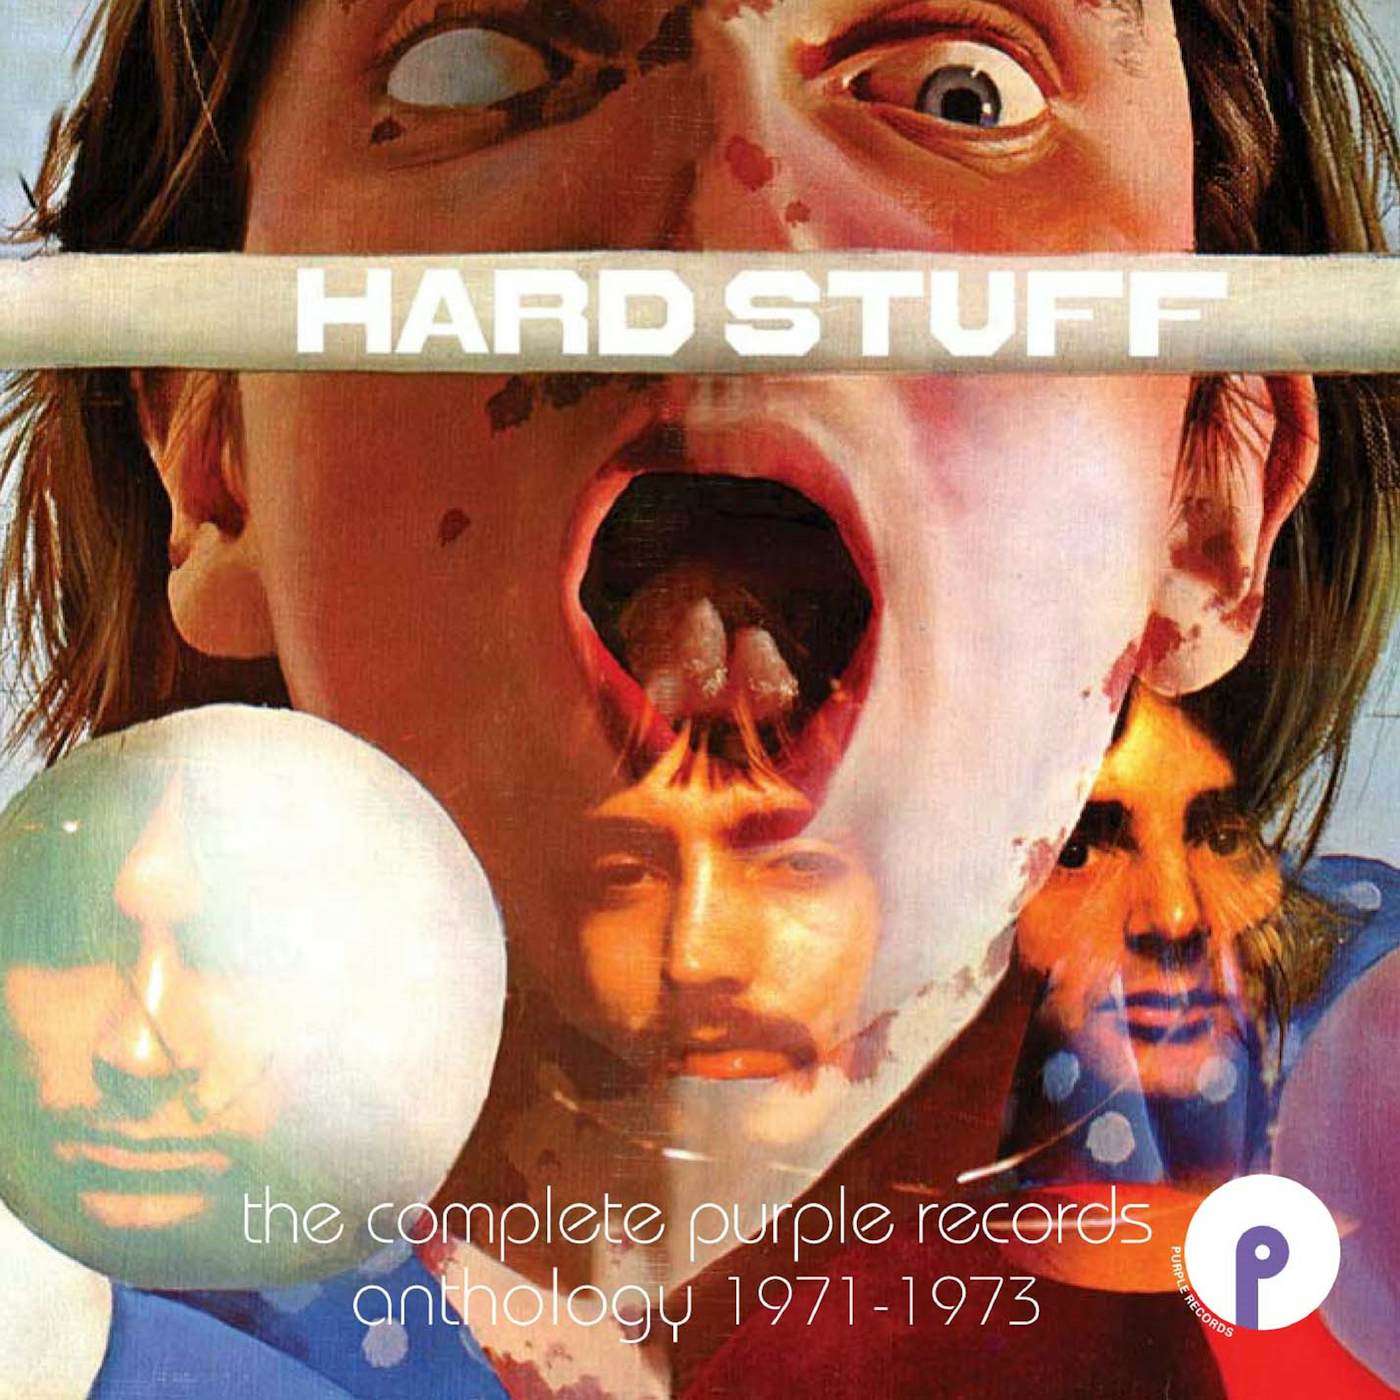 Hard Stuff COMPLETE PURPLE RECORDS ANTHOLOGY 1971-1973 CD